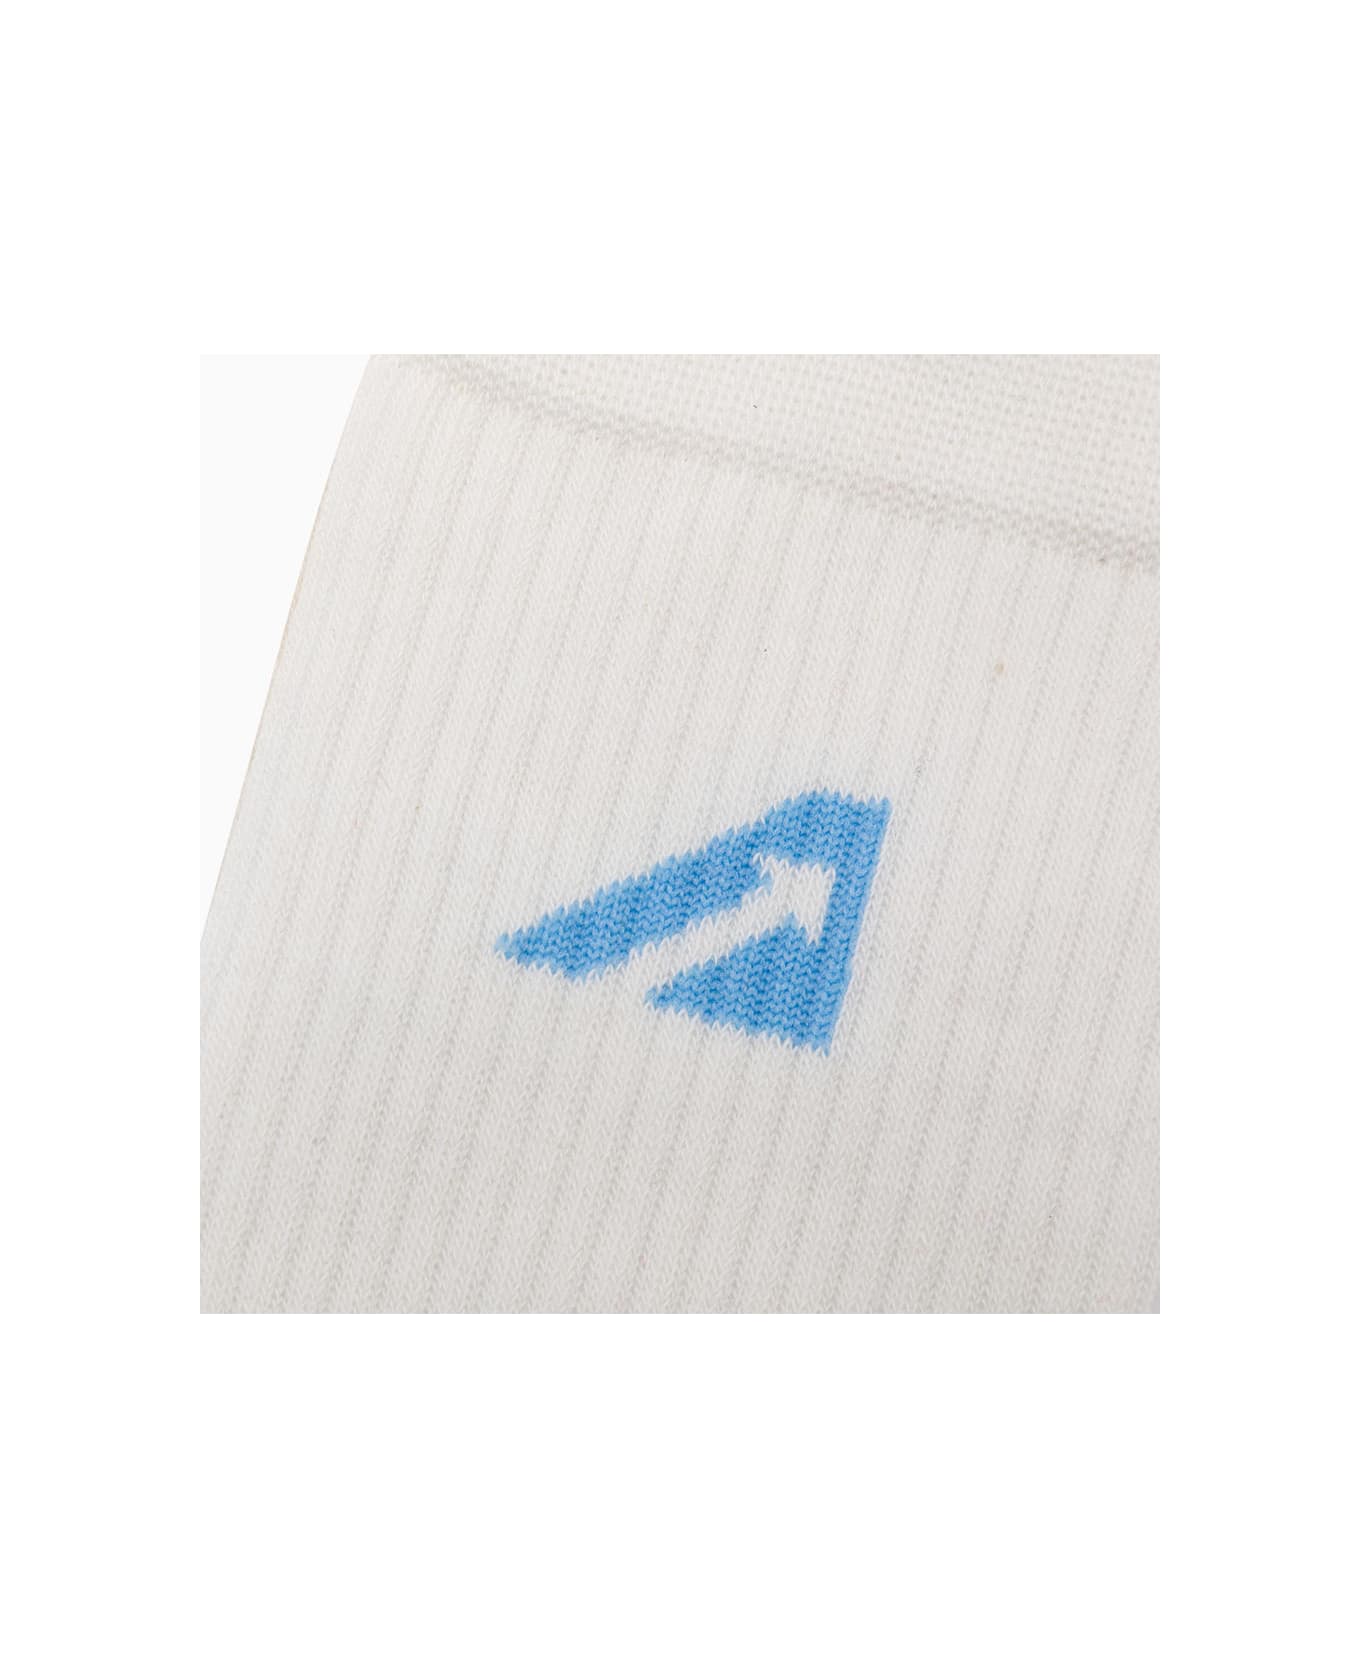 Autry Main Socks - White/azur